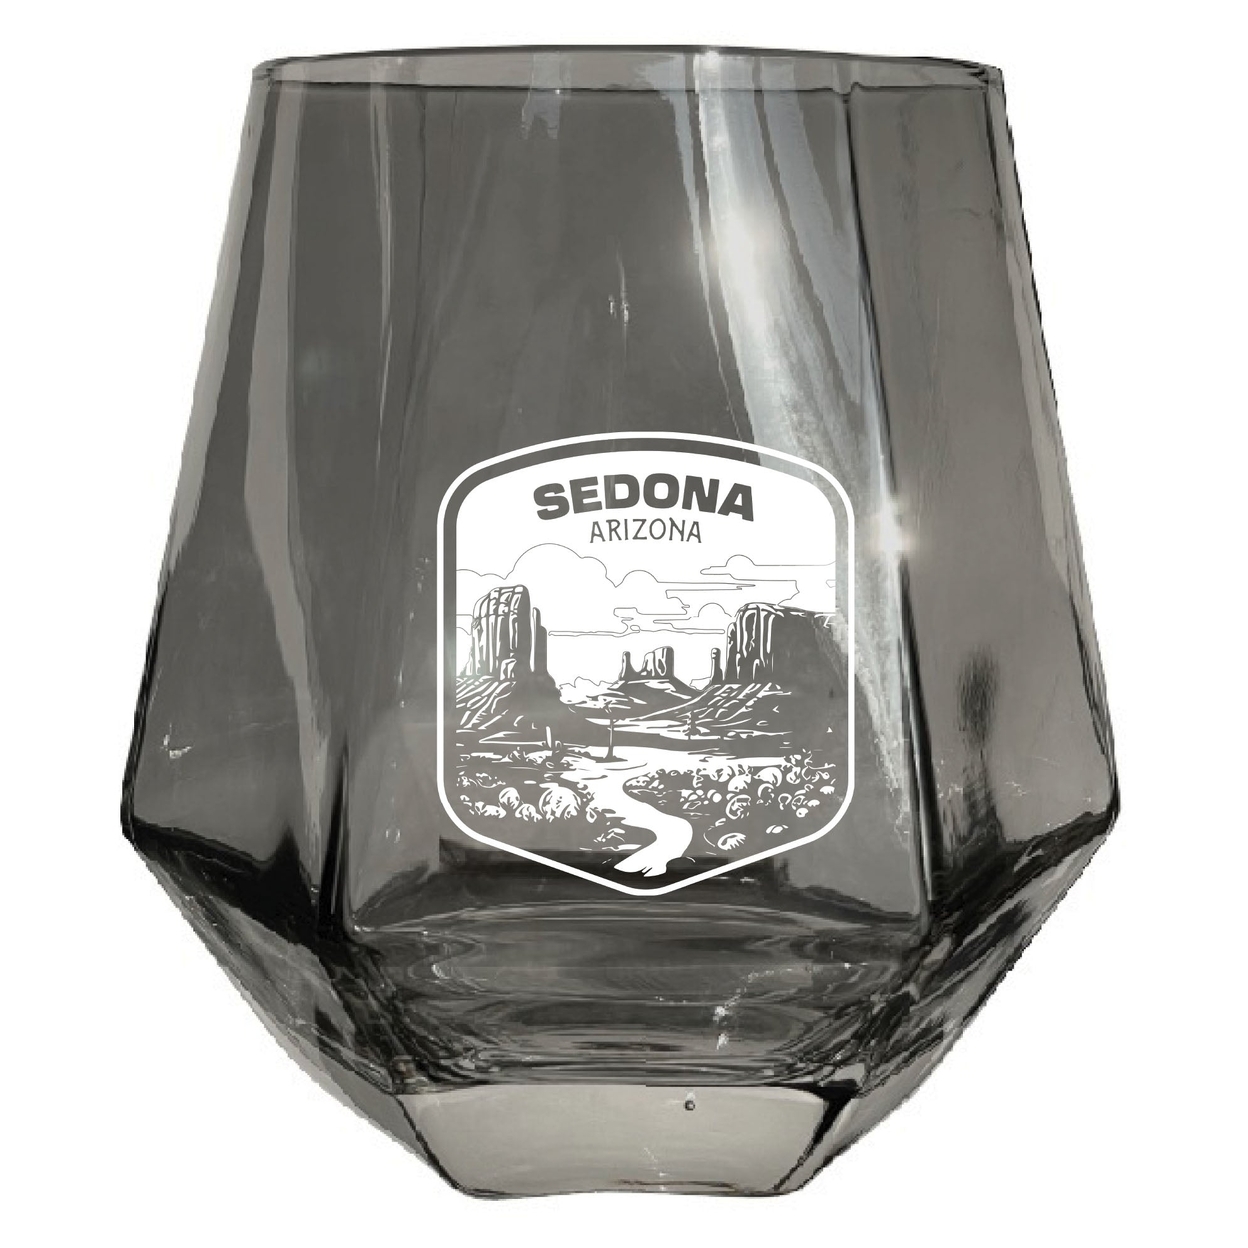 Sedona Arizona Souvenir Wine Glass EngravedDiamond 15 Oz Clear Iridescent - Iridescent,,4-Pack